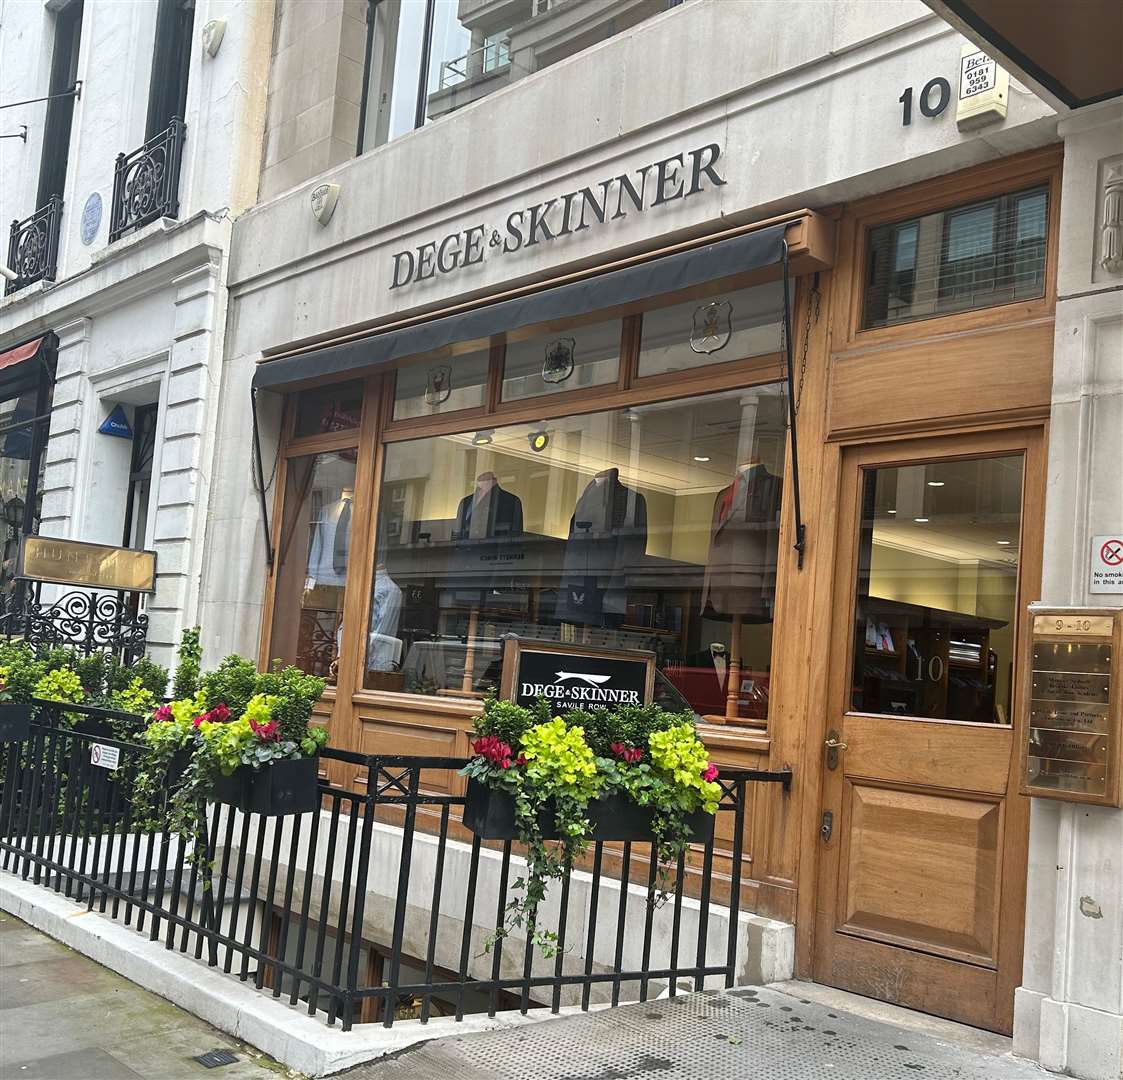 Dege & Skinner, No 10 Savile Row - established in 1865